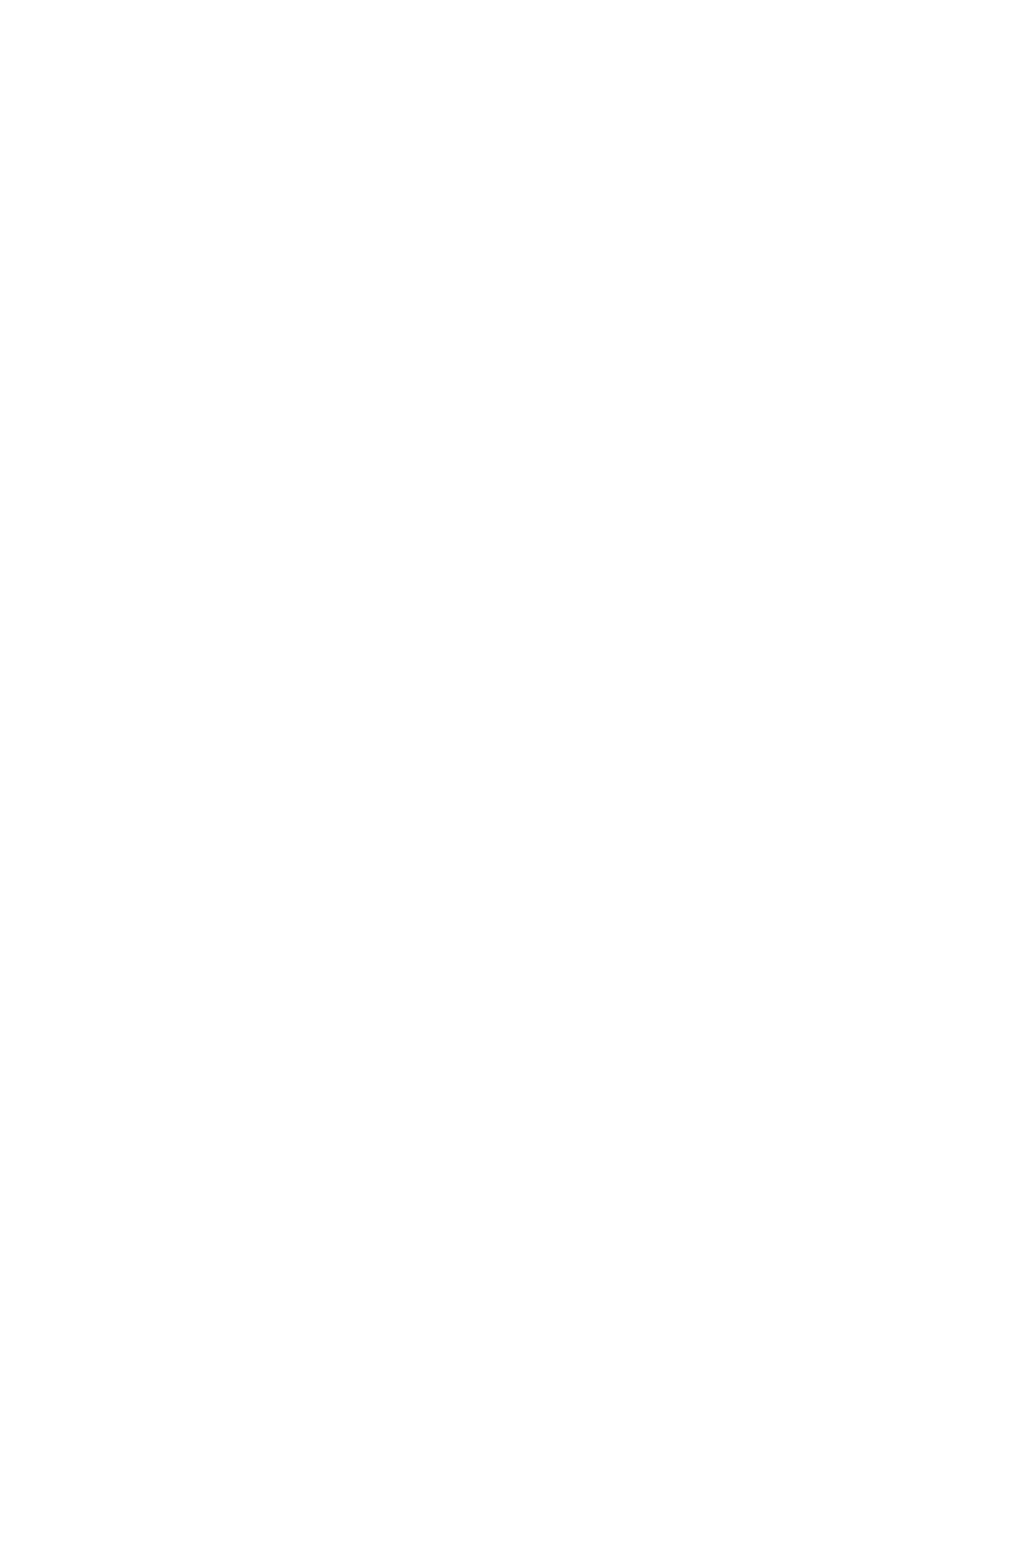 Sinclair Broadcast logo for dark backgrounds (transparent PNG)